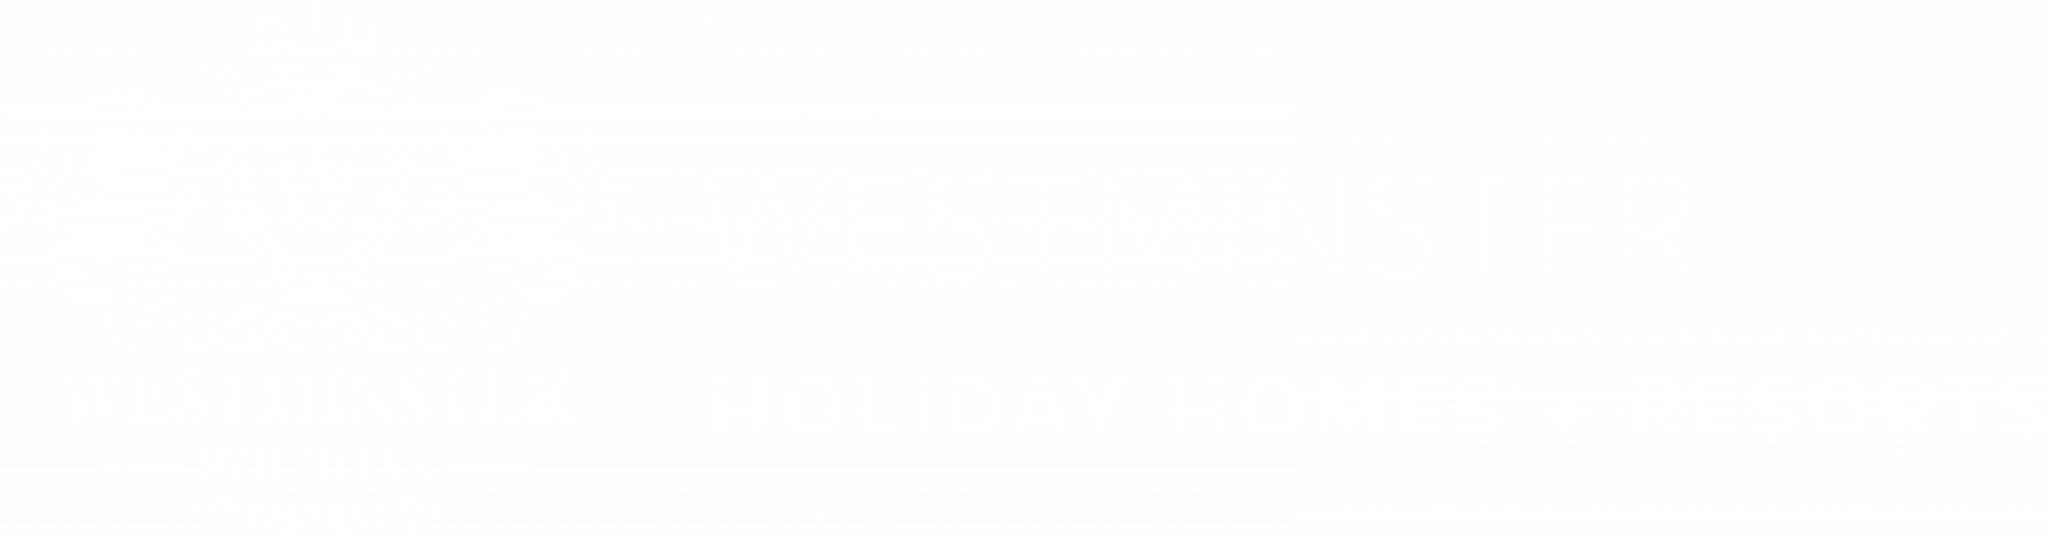 Westminster Hotels + Resorts + Ferienhäuser